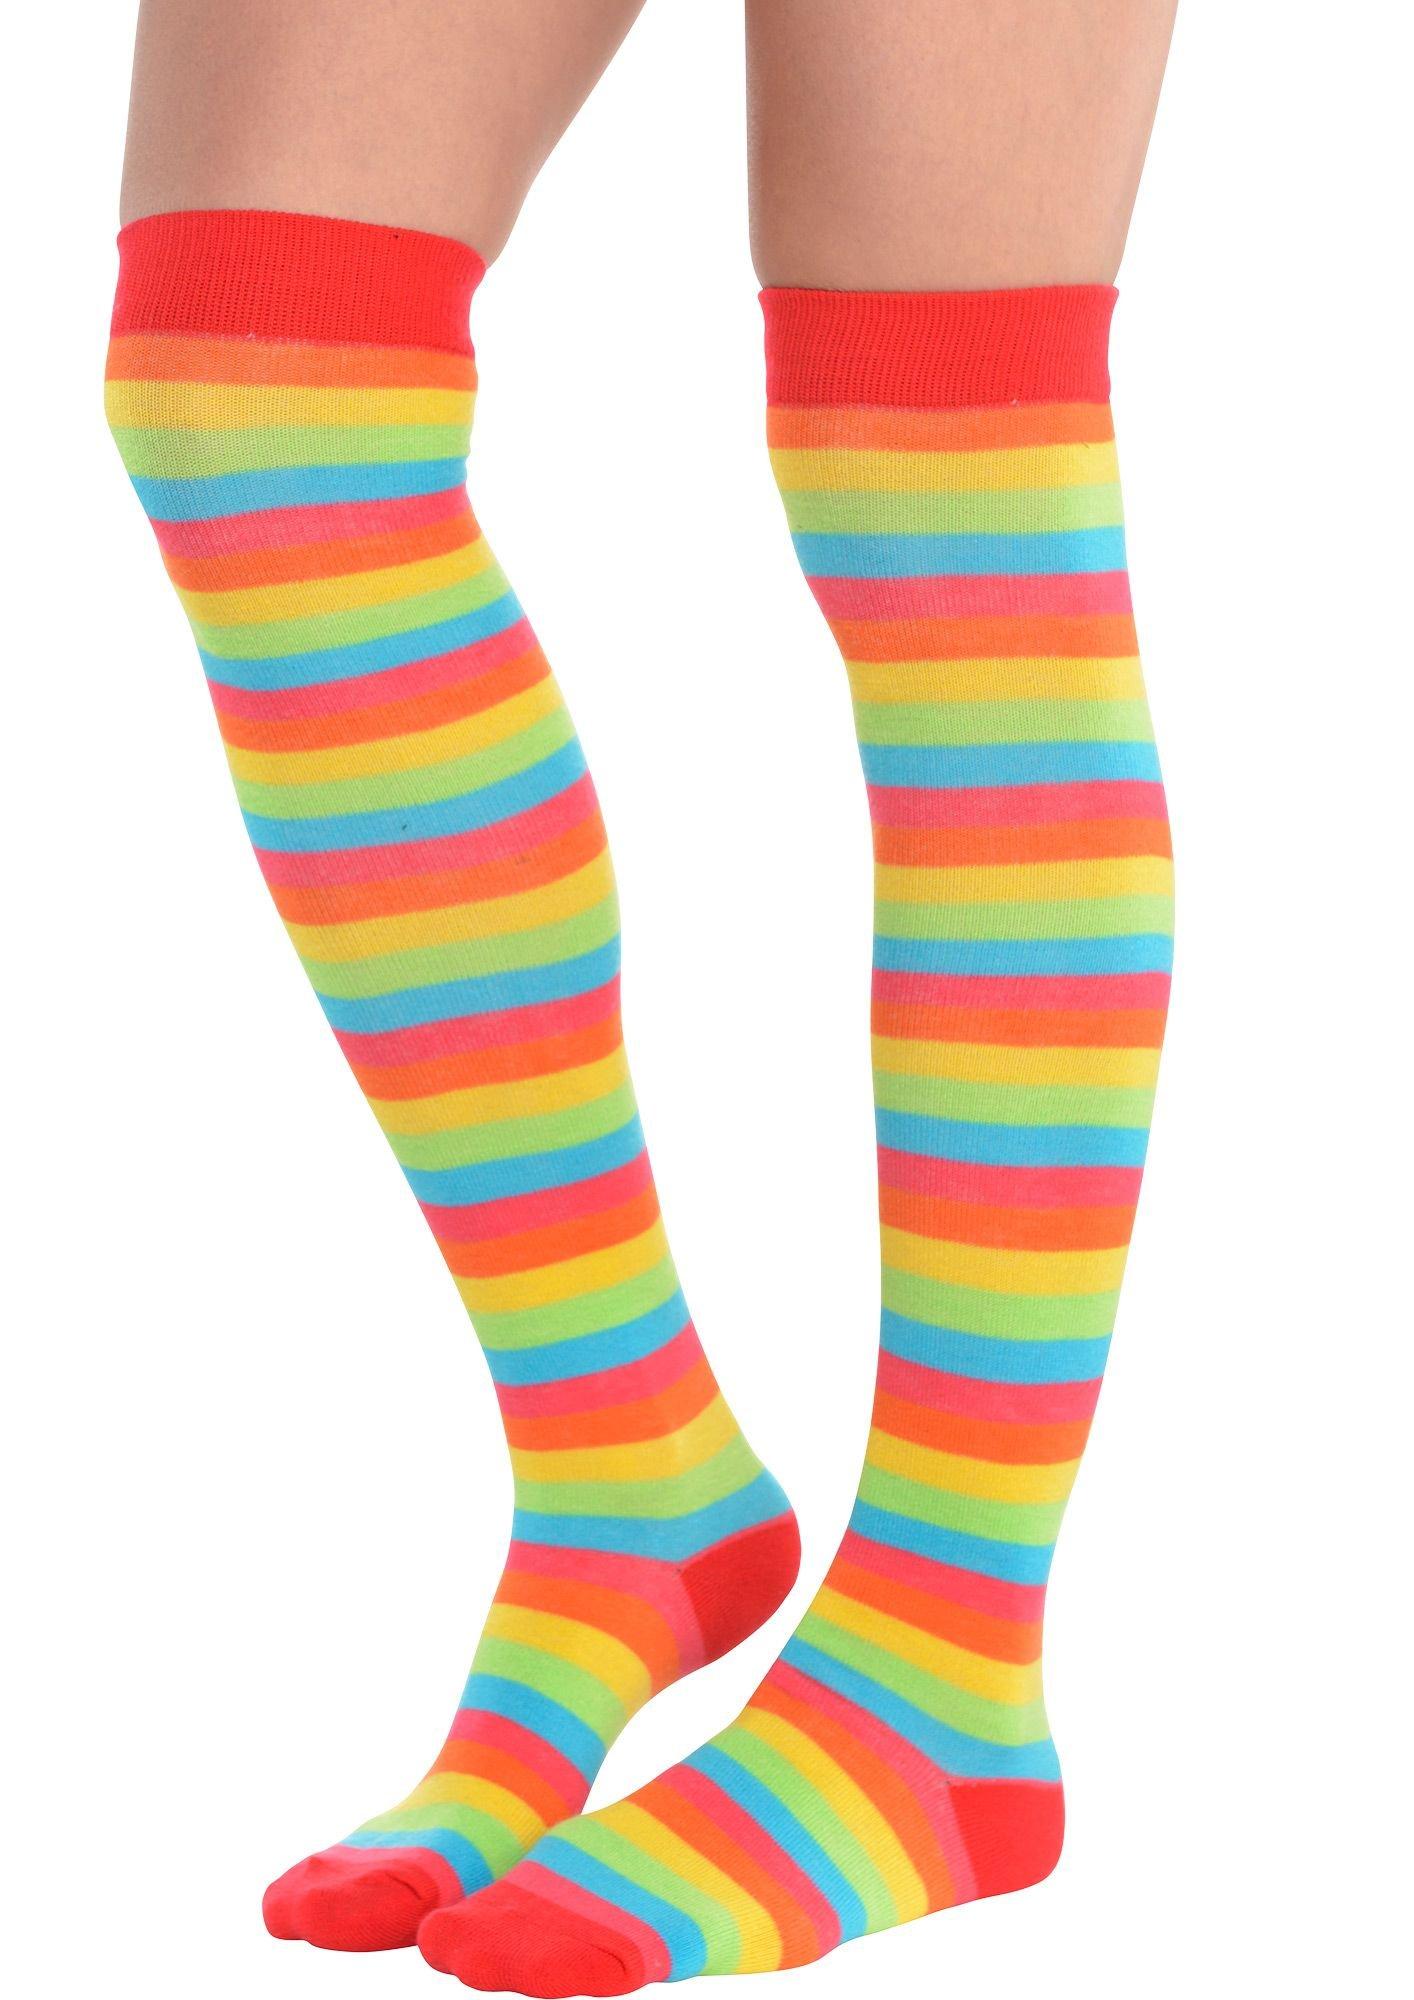 Rainbow Striped Knee Highs